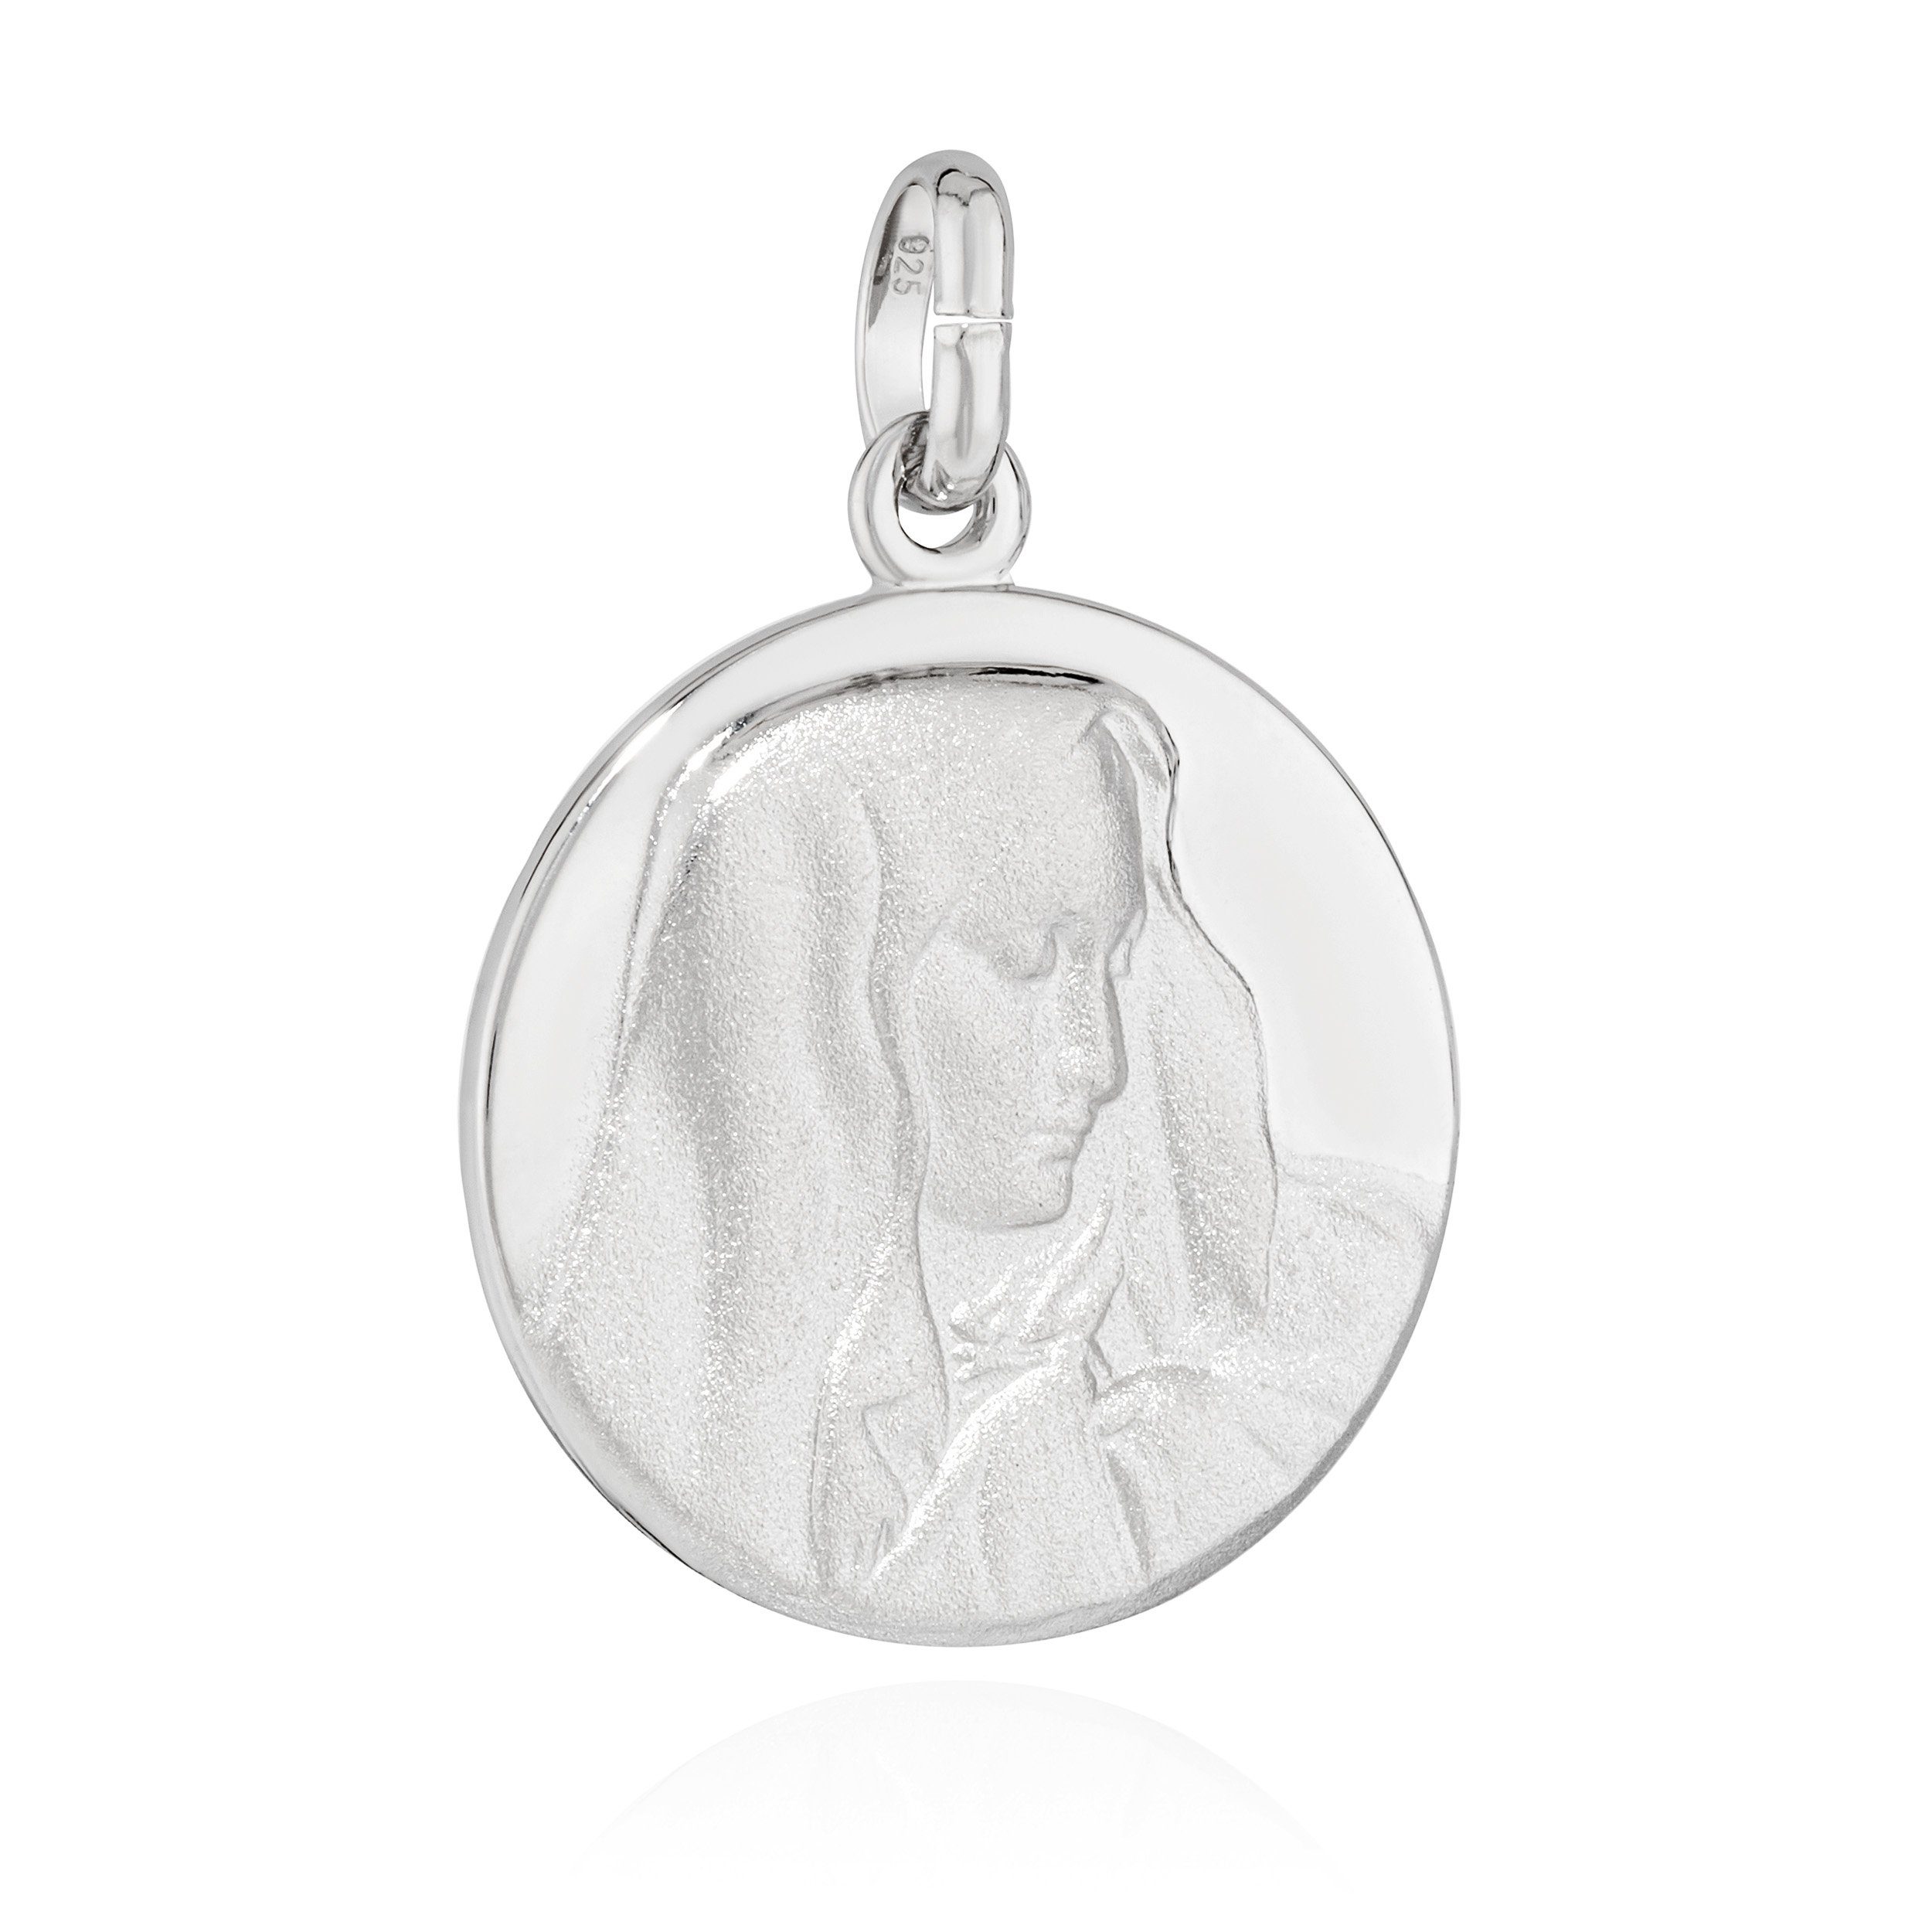 NKlaus Kettenanhänger Kettenahänger heilige jungfrau Maria 925 Silber teilmatt 16mm Talisman | Kettenanhänger